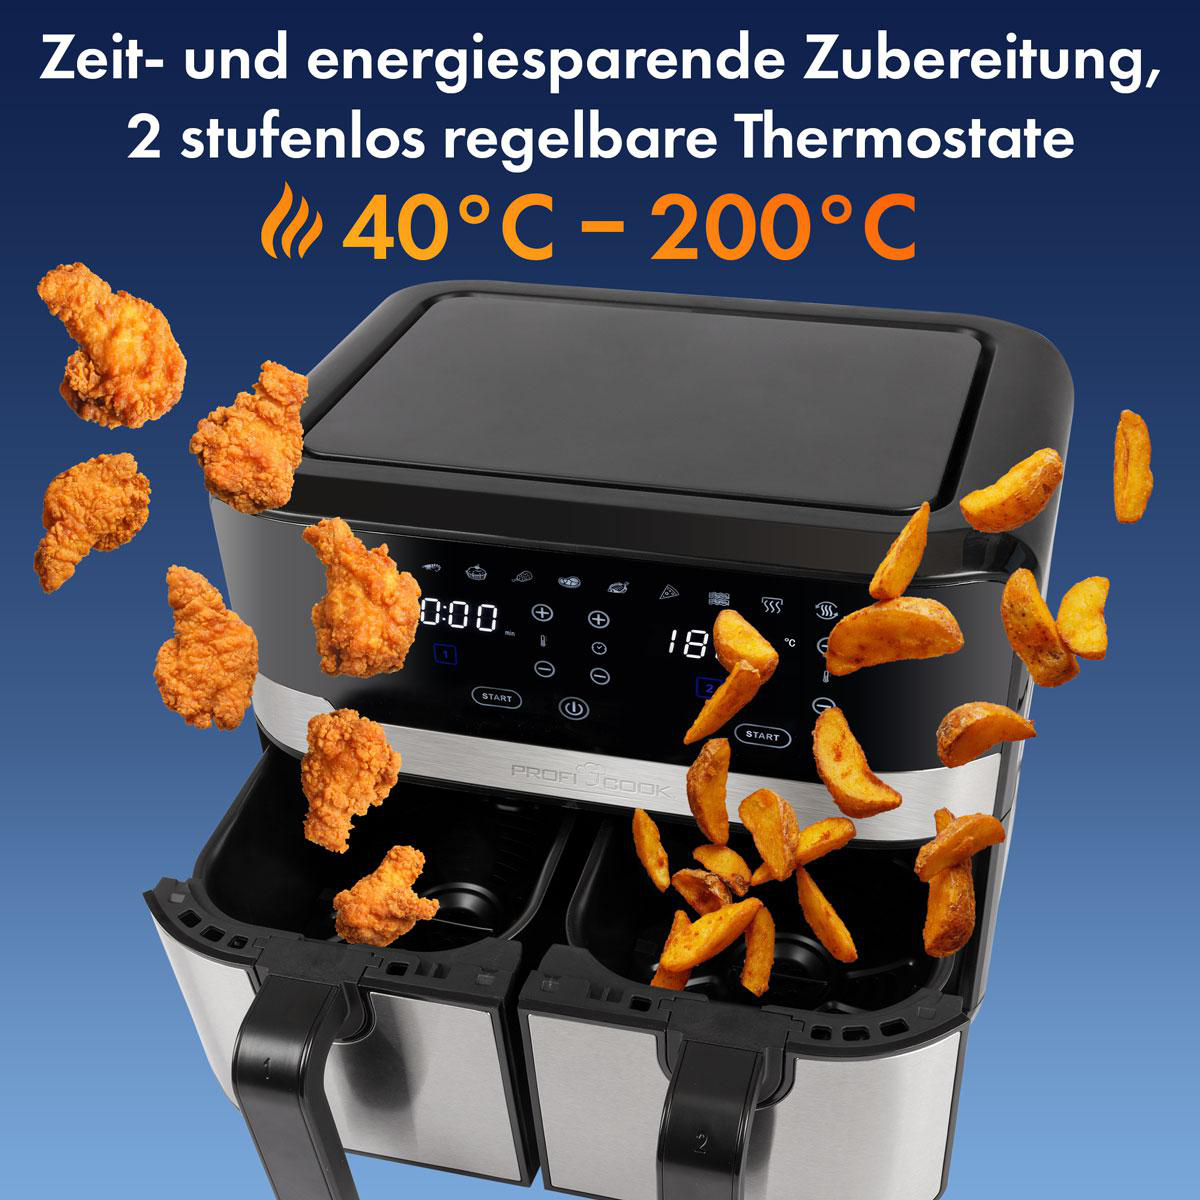 PROFICOOK PC-FR 1242 H 2400 Watt Schwarz/Edelstahl Heißluftfritteuse